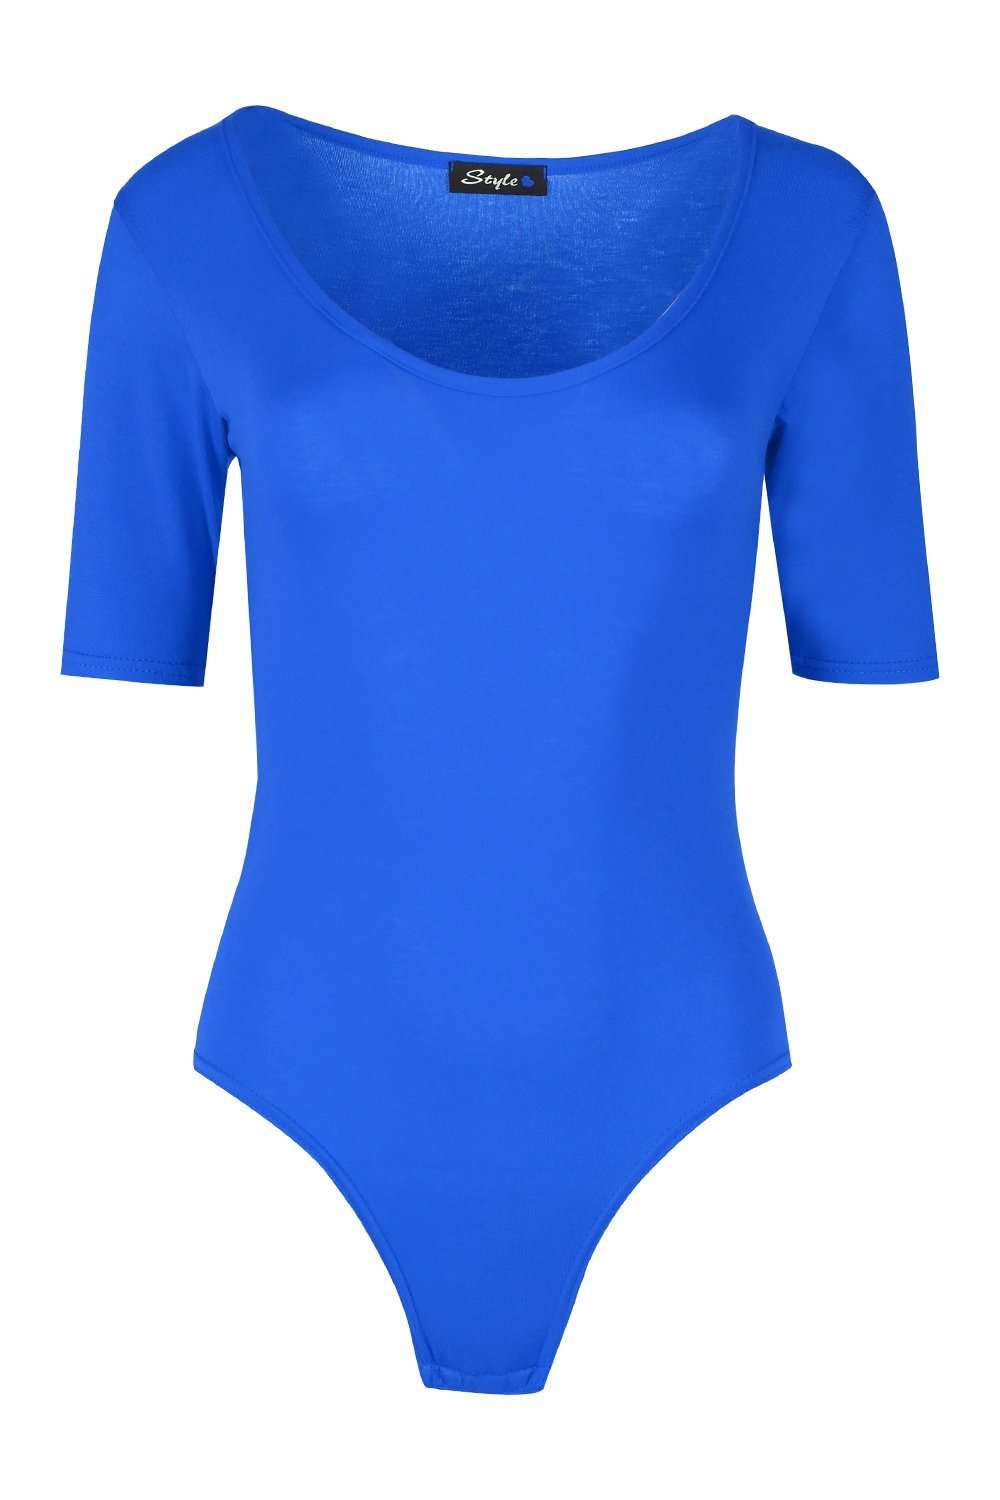 Emilia Cap Sleeve Basic Jersey Bodysuit - bejealous-com